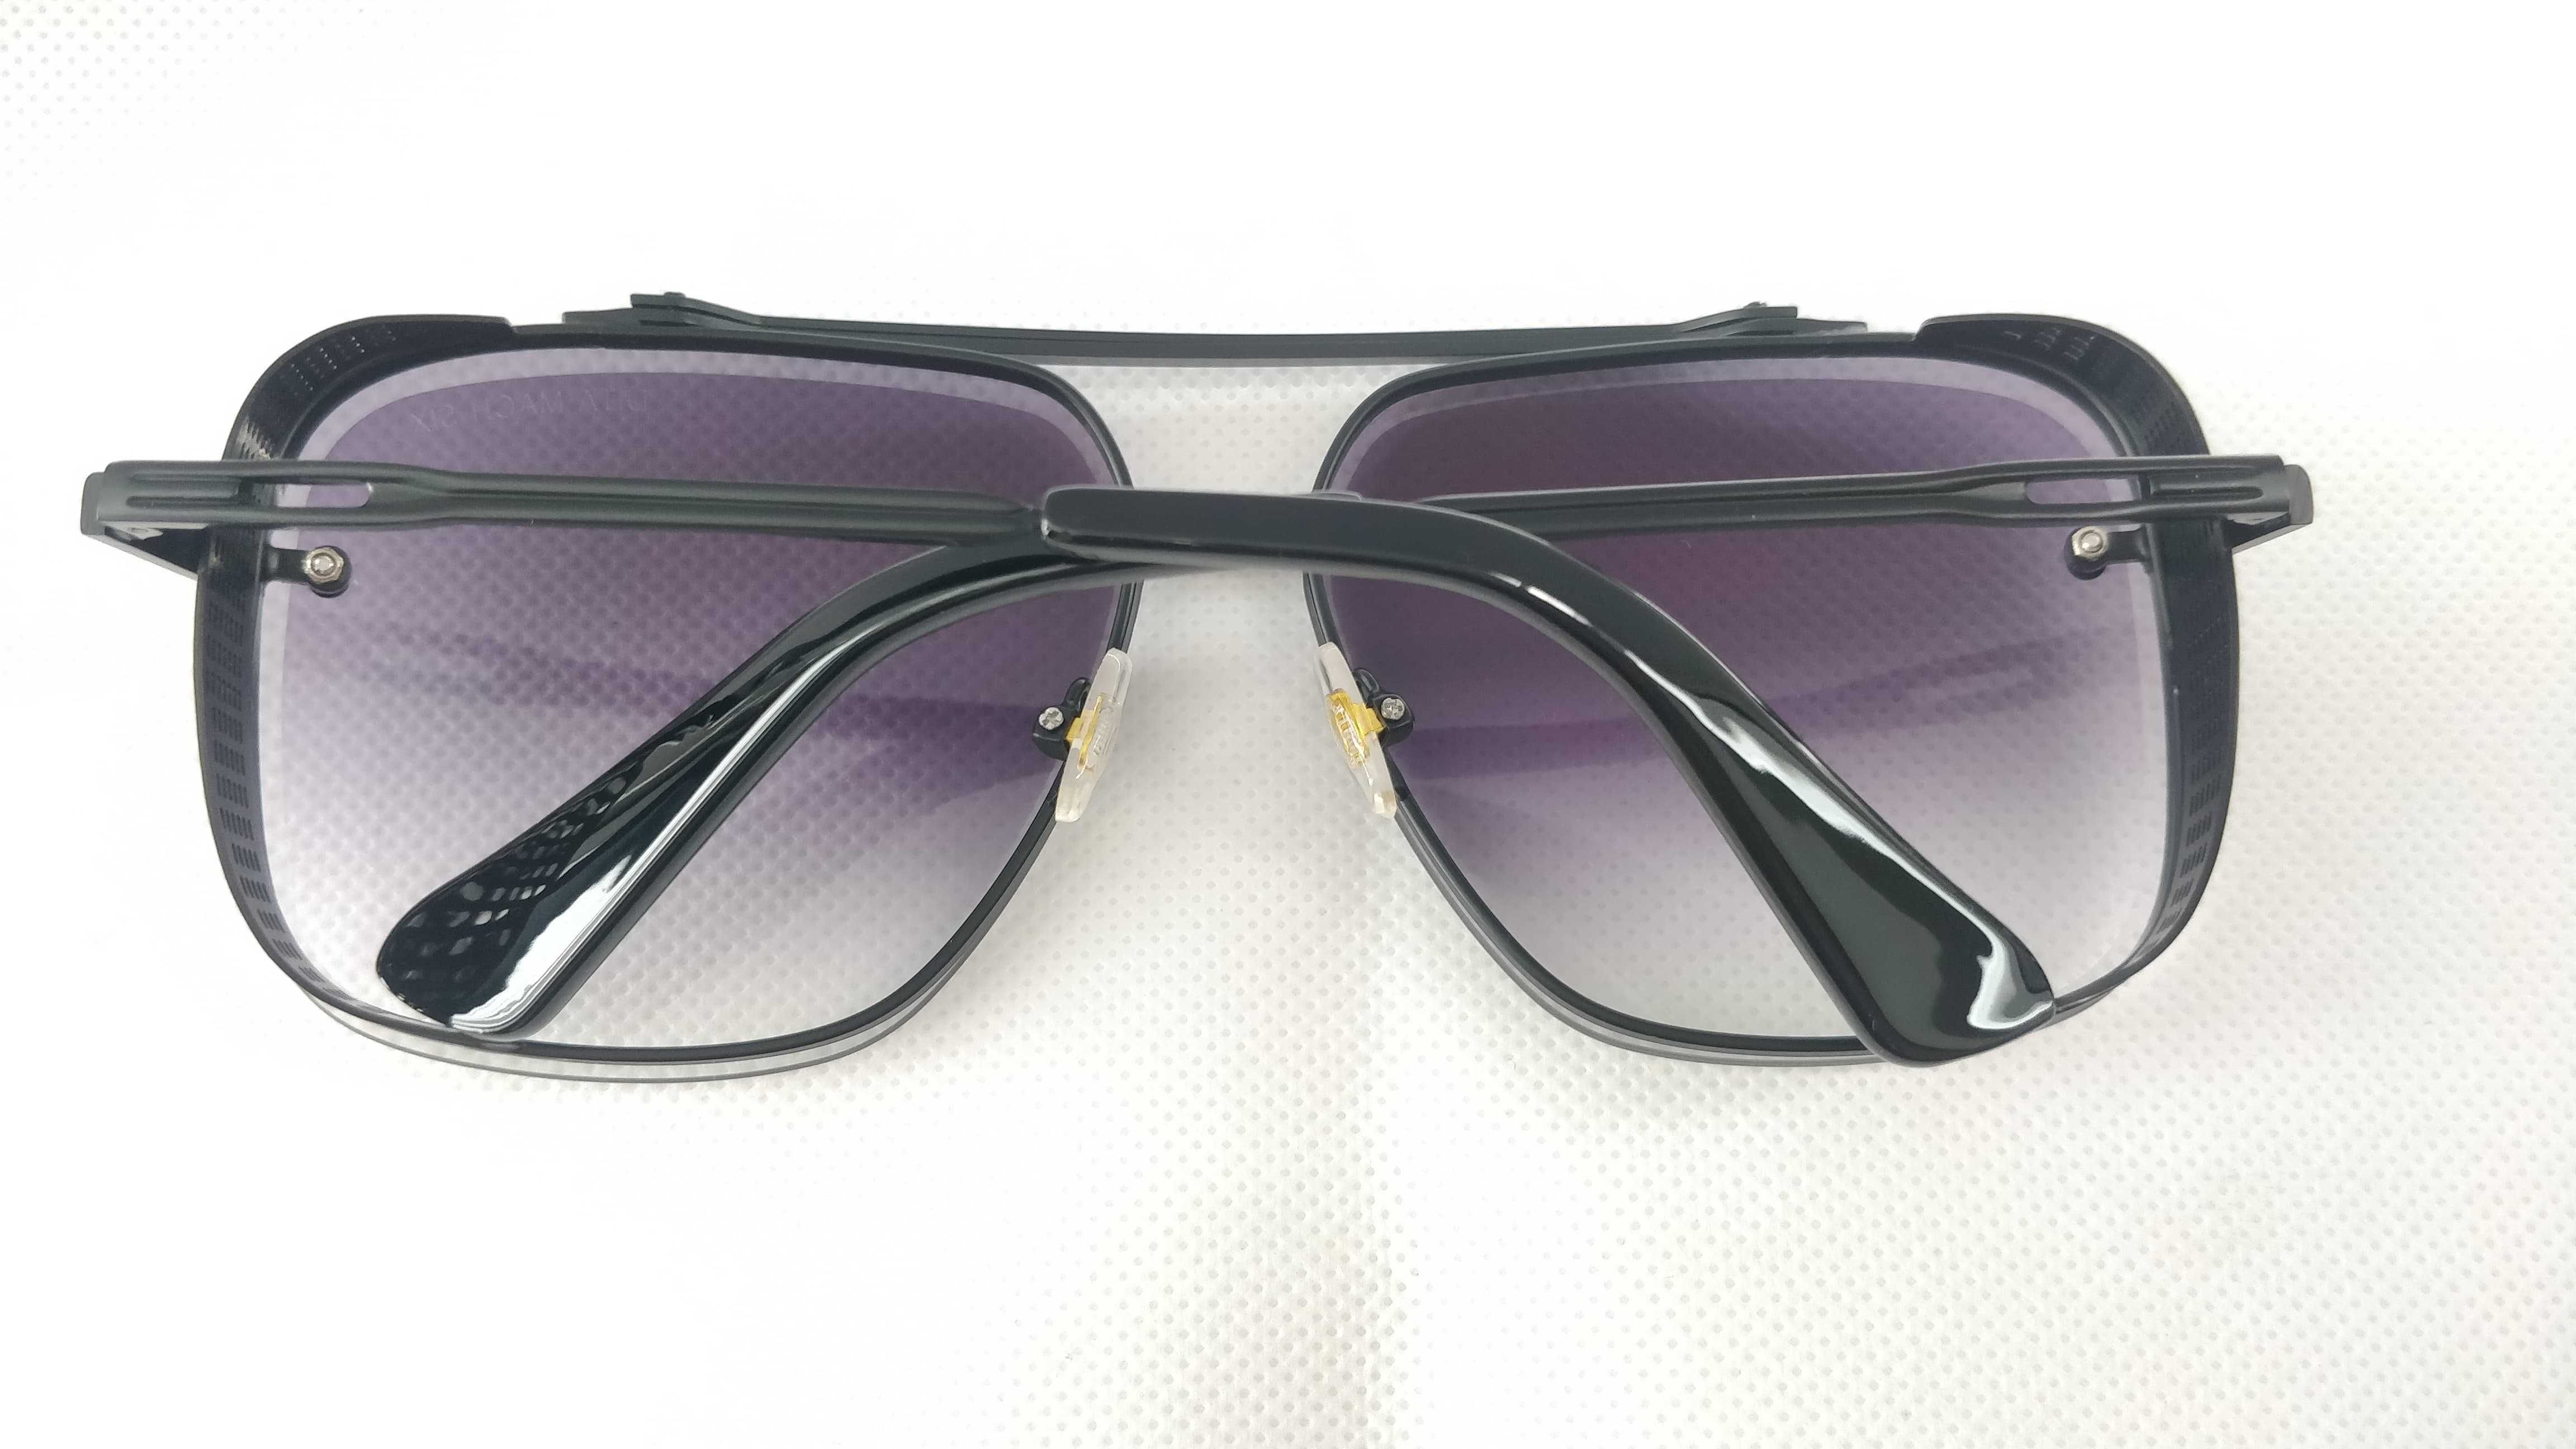 Ochelari de Soare Dita Mach Six Purple Black